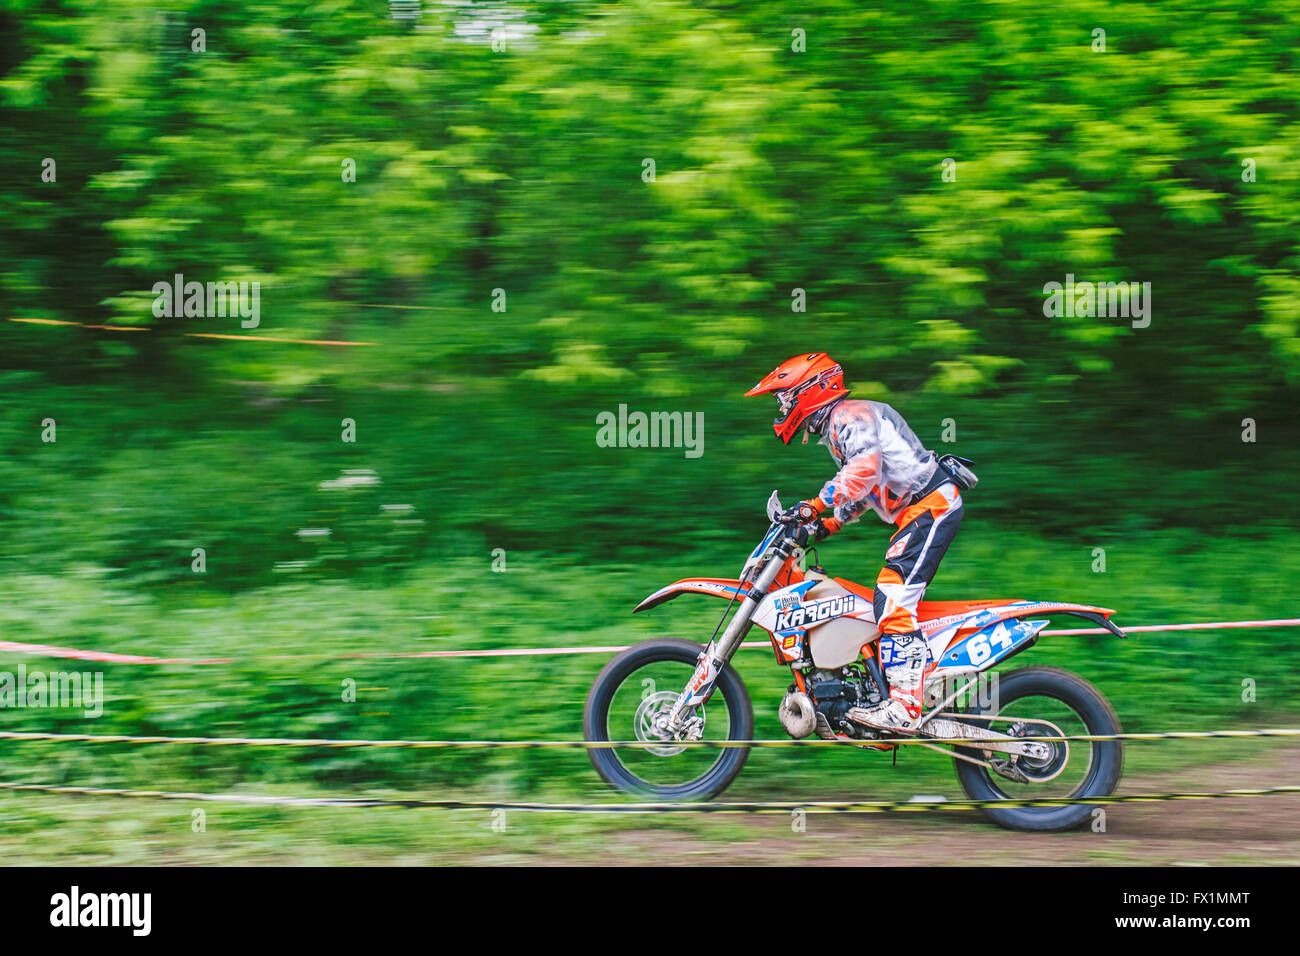 Enduro motorcyclist motocross rider Stock Photo